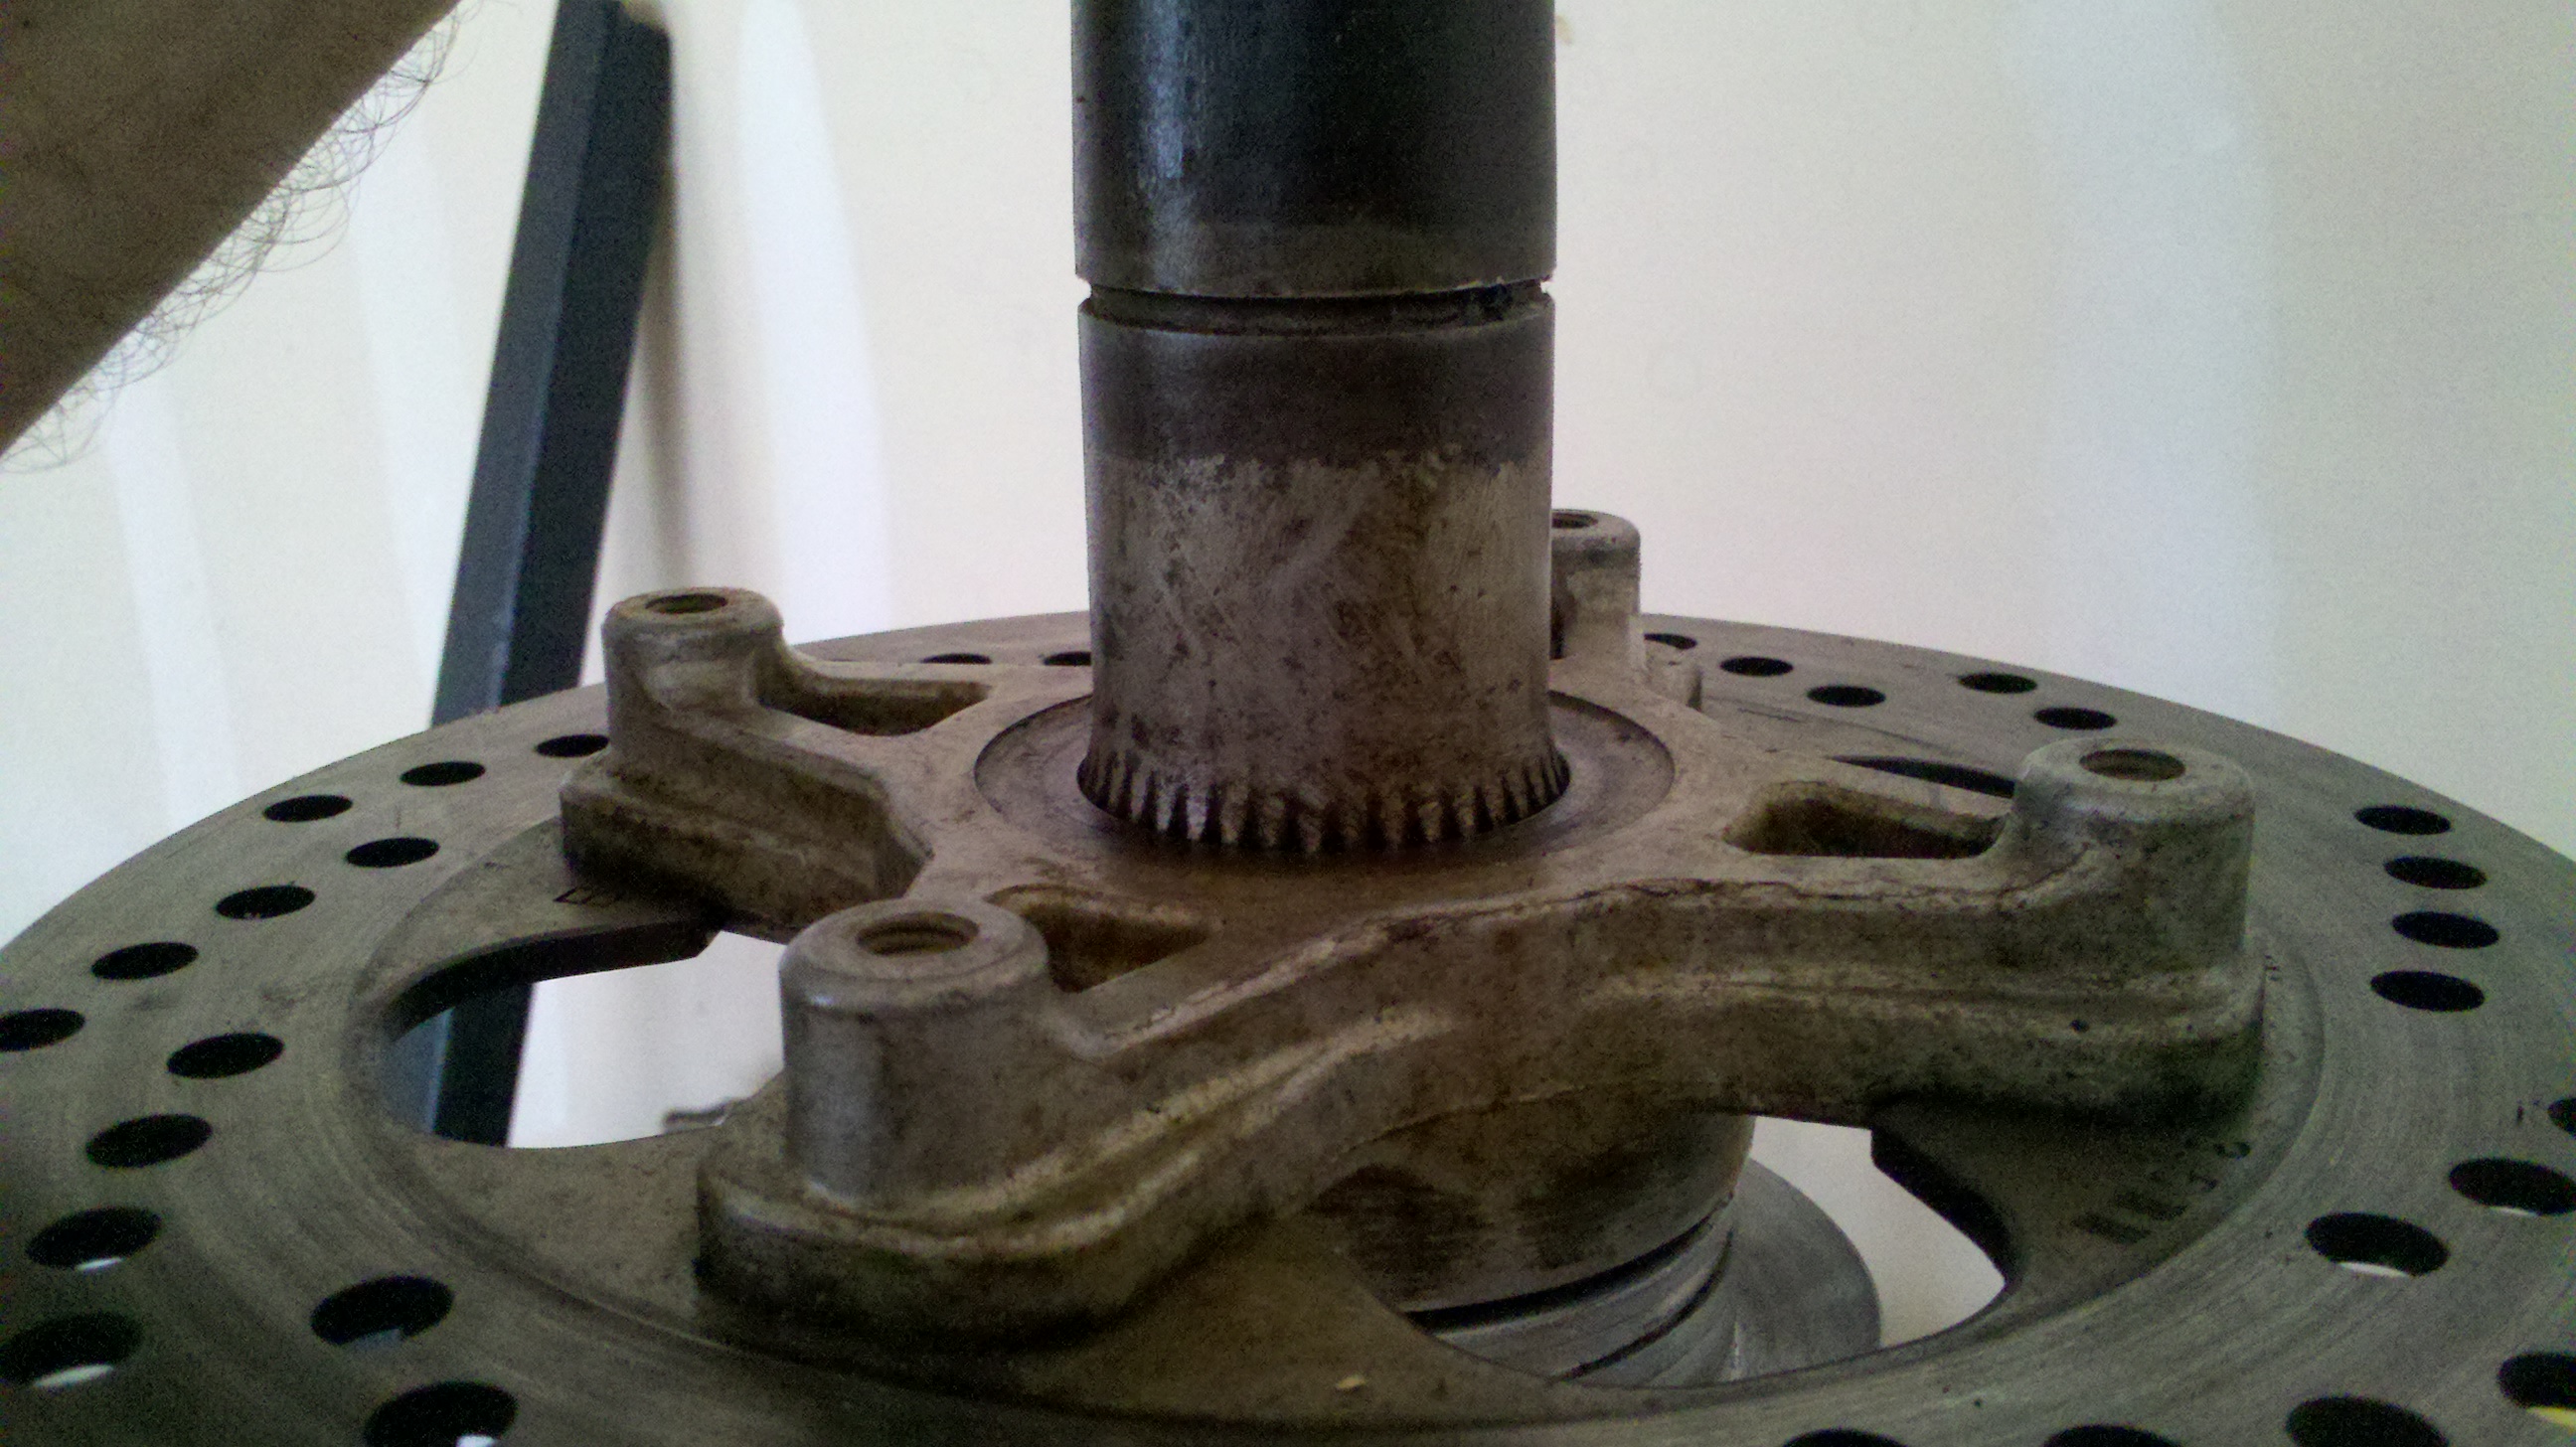 Honda 400ex axle bearing removal #2